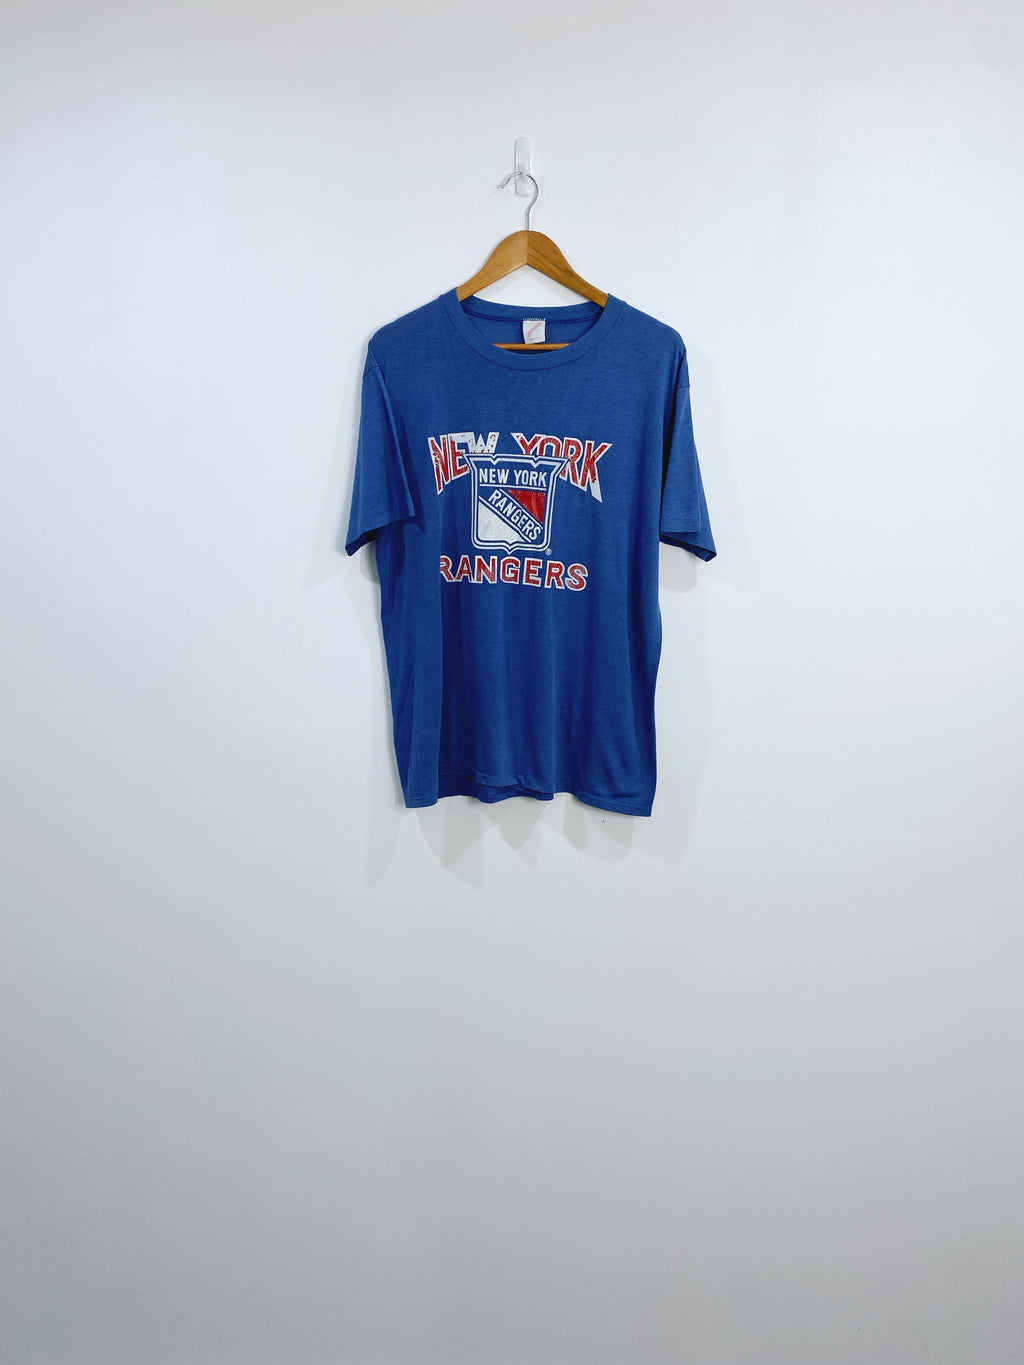 Vintage 80s New York Rangers T-shirt